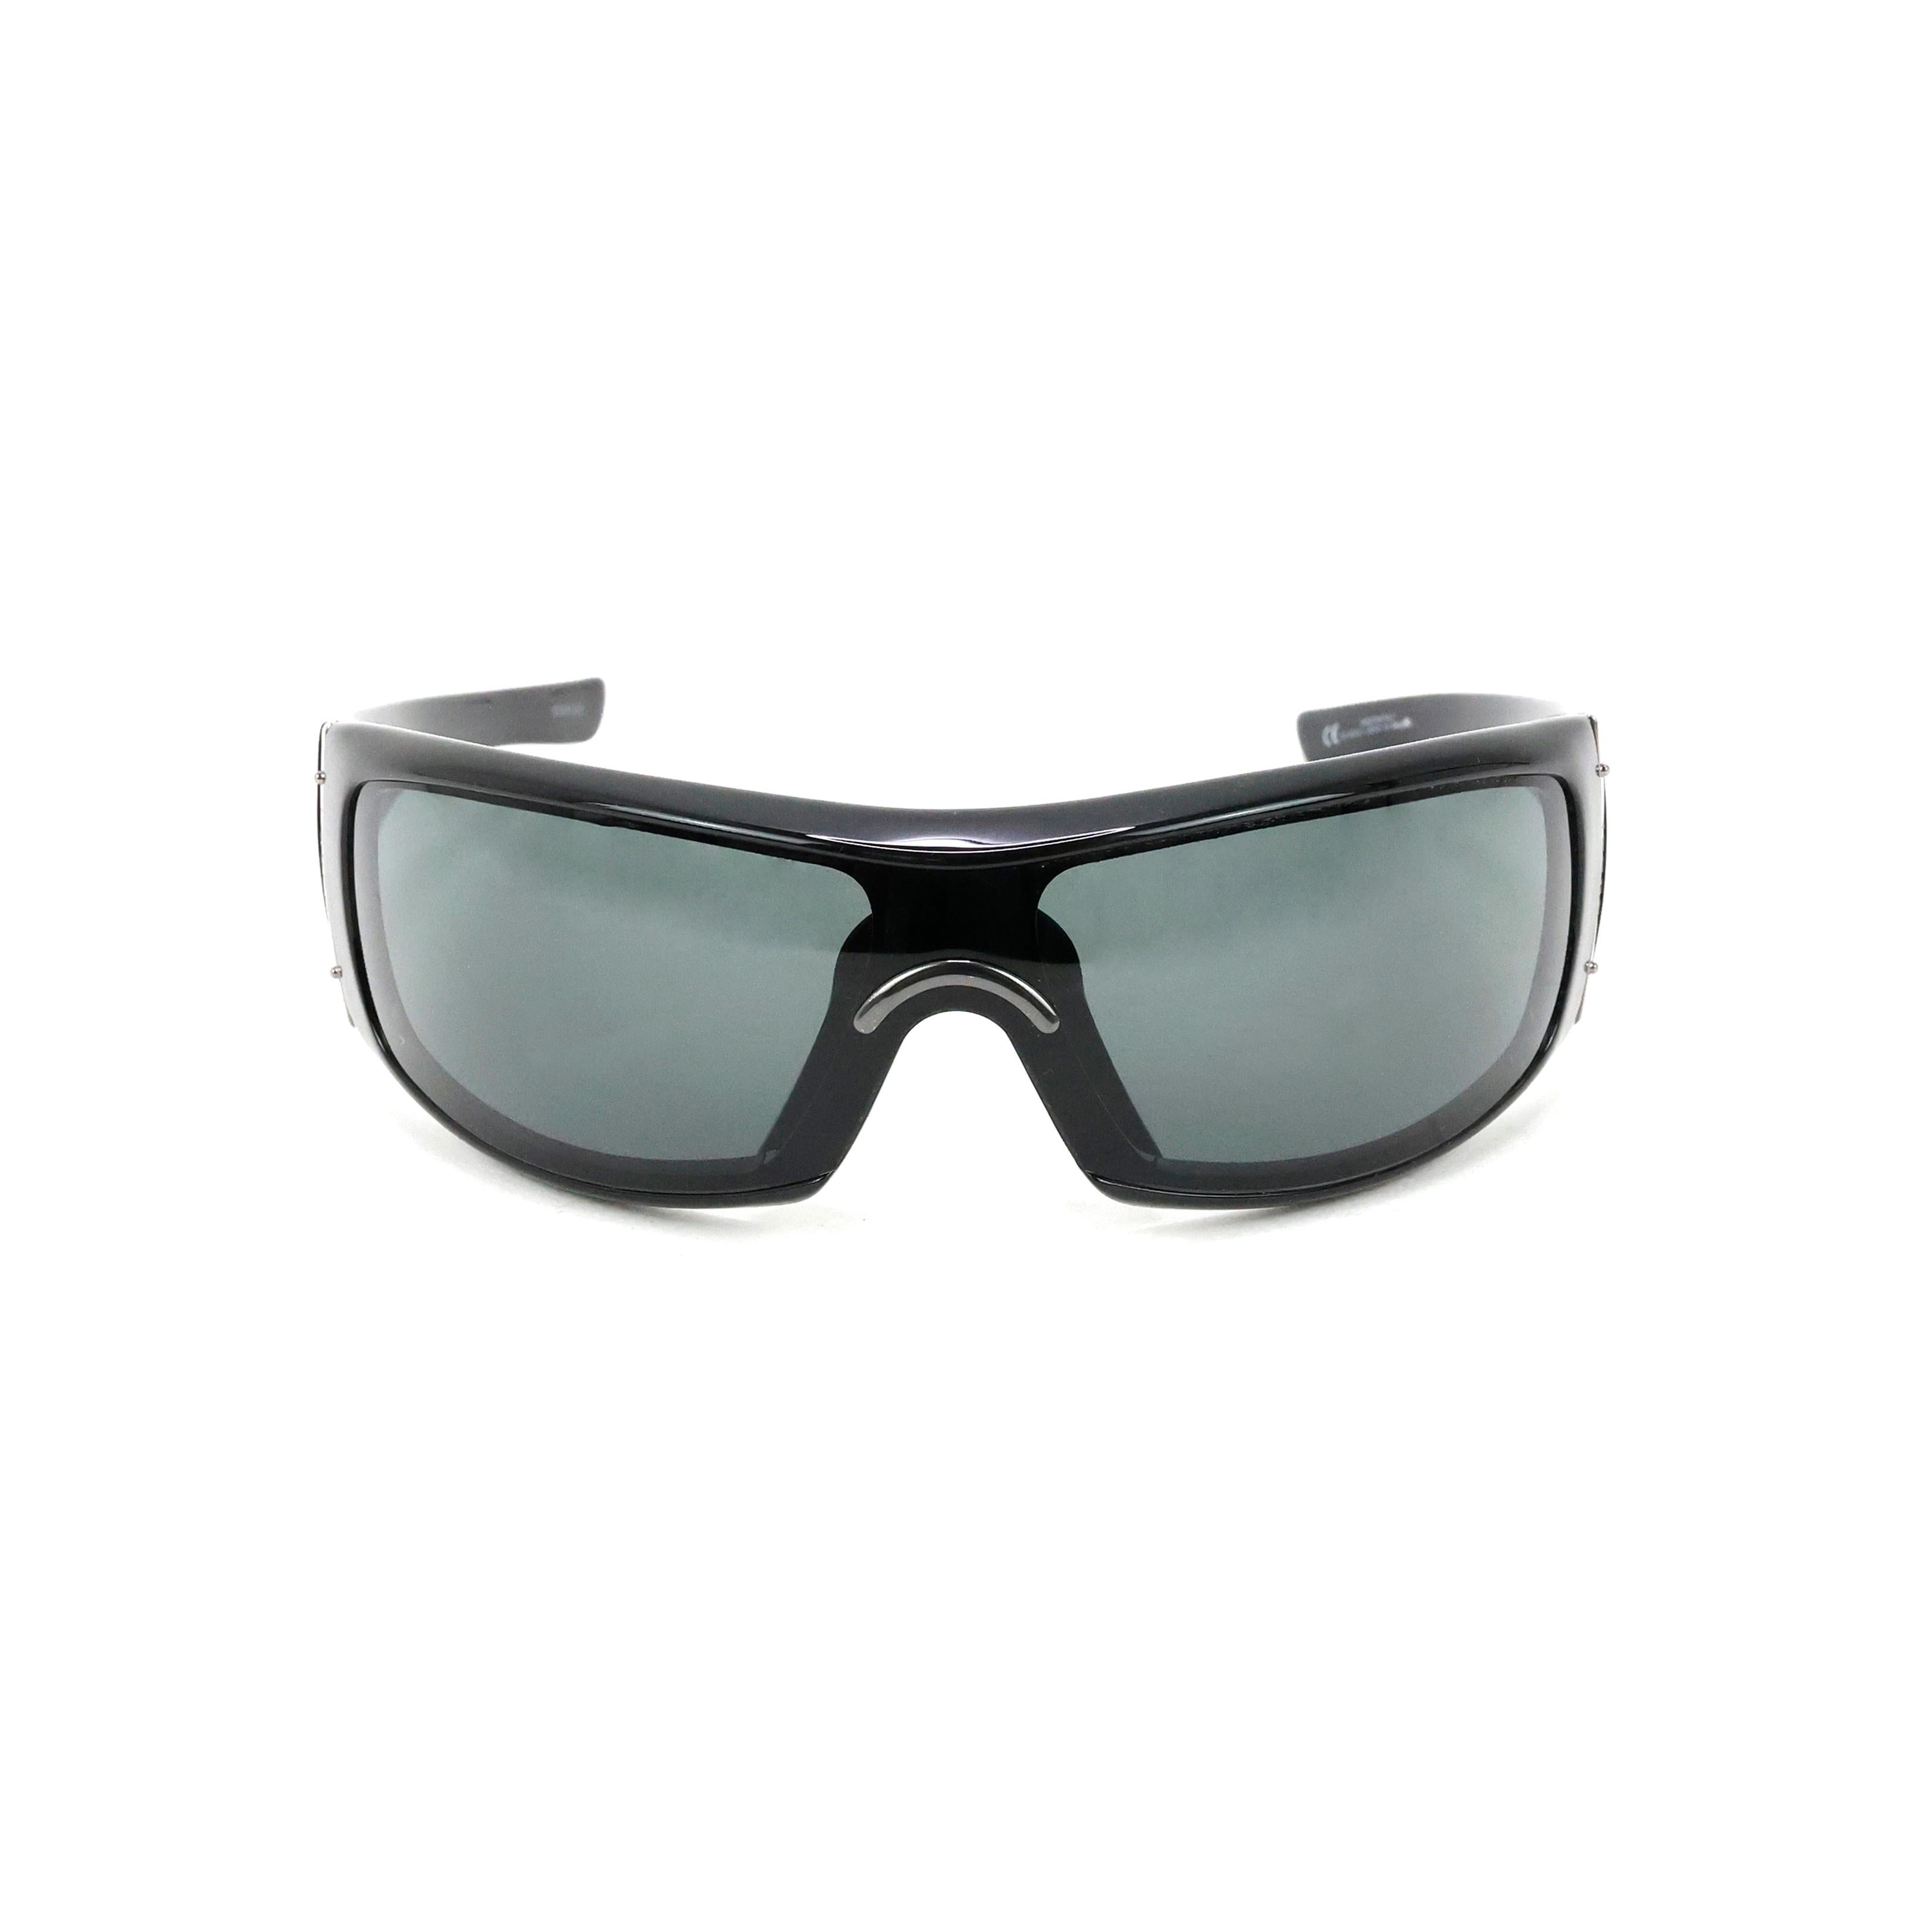 Gucci sunglasses color black.

Condition:
Excellent.

Packing/accessories:
Case.